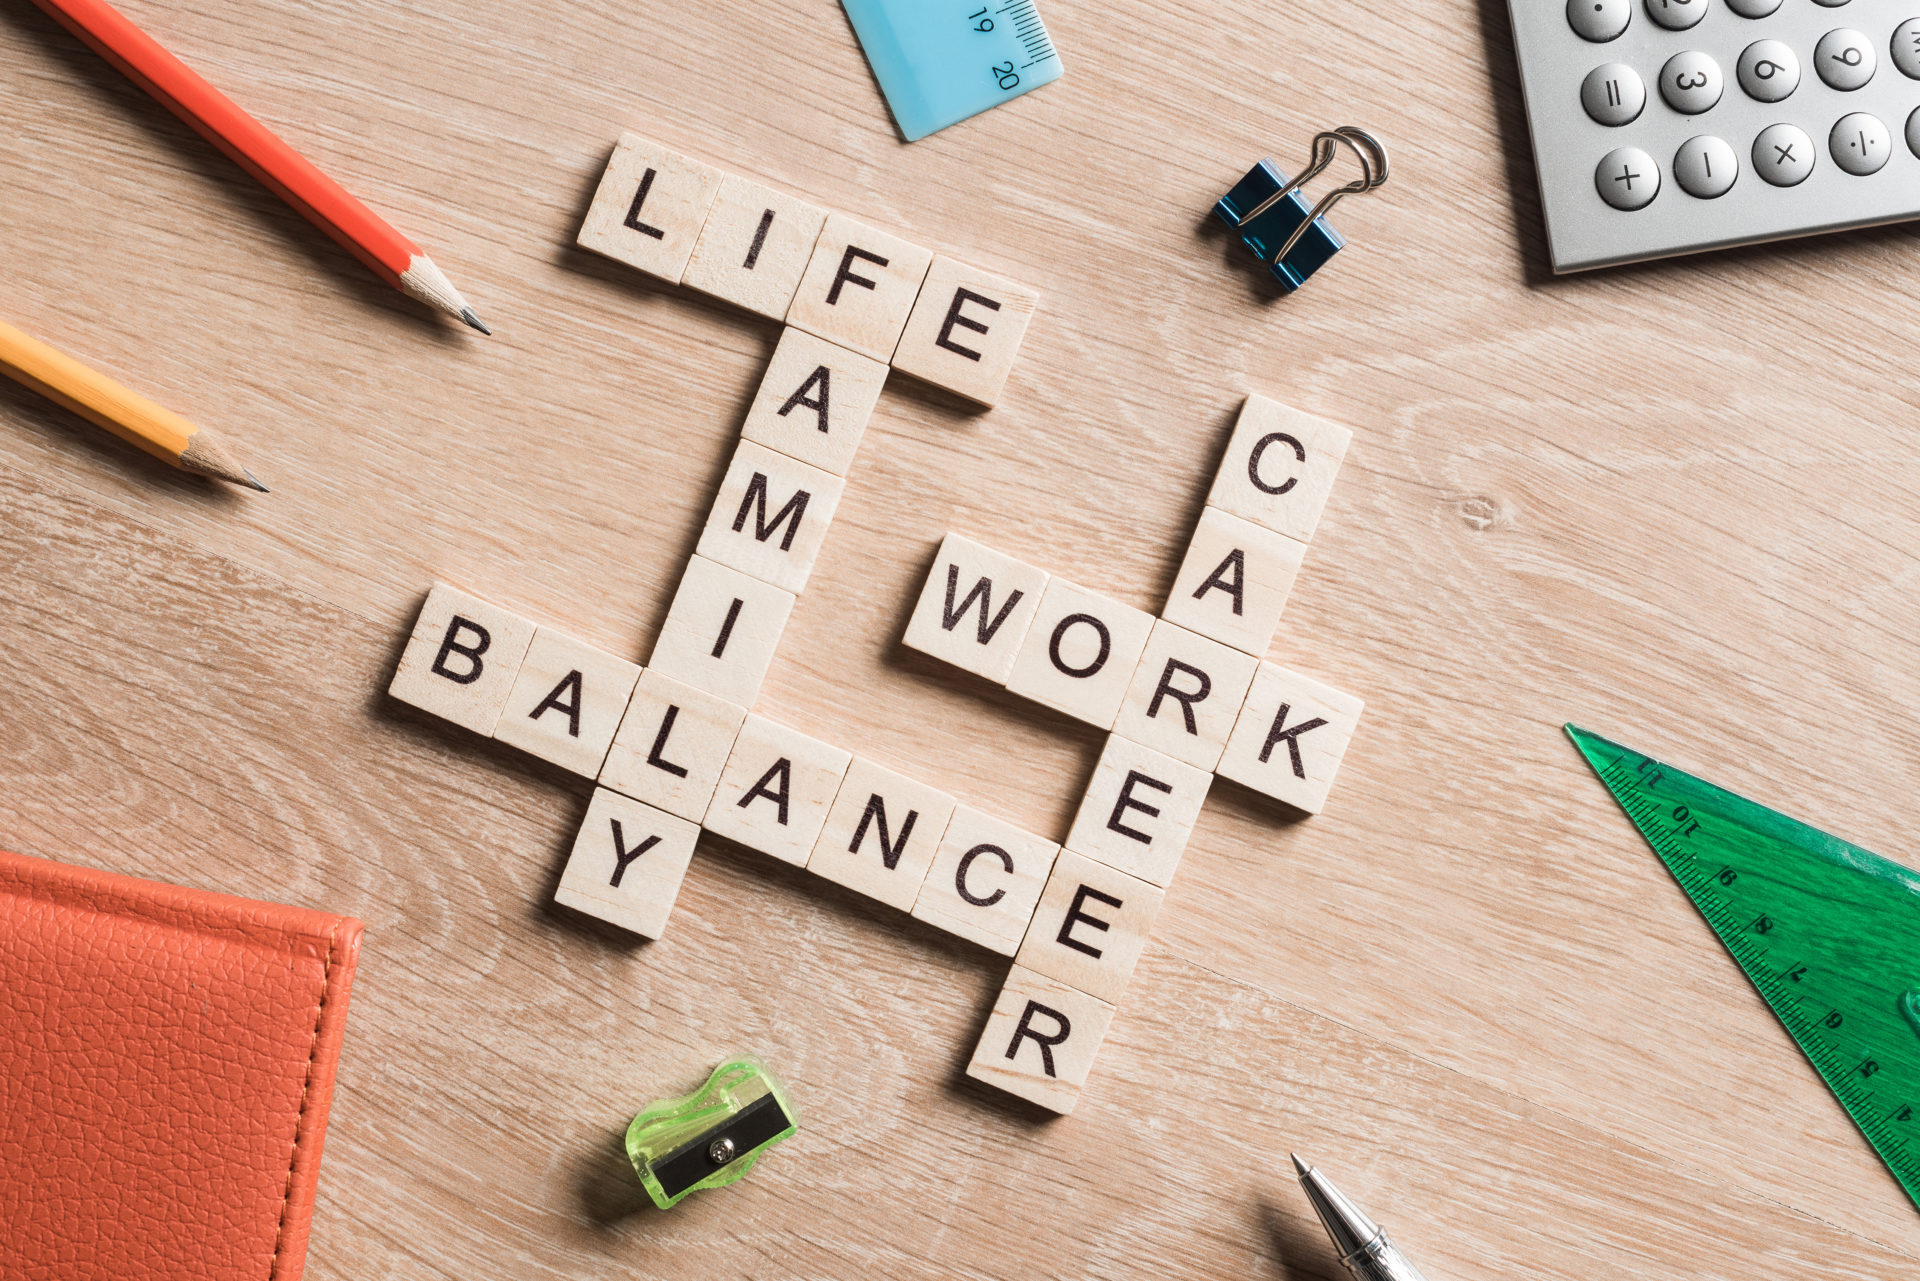 Innovative Ideas to Promote Work-Life Balance